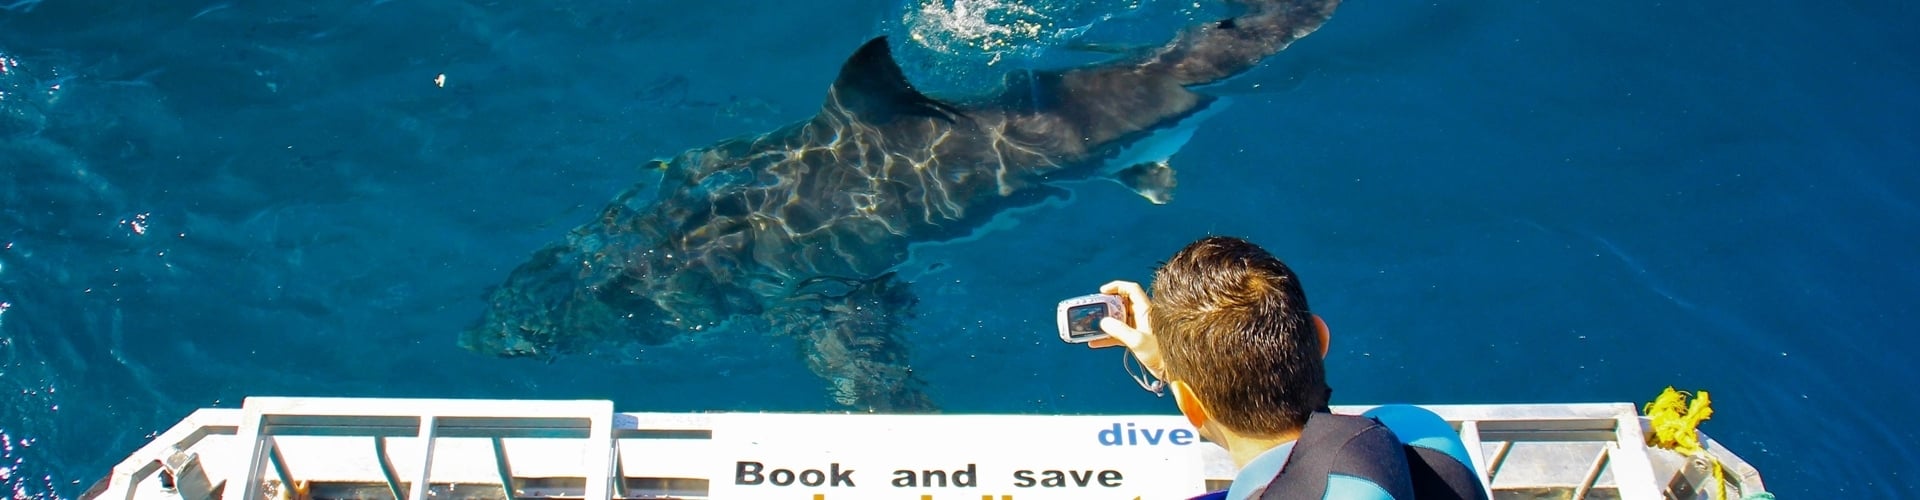 Haaien spotten - Activiteiten Zuid-Afrika